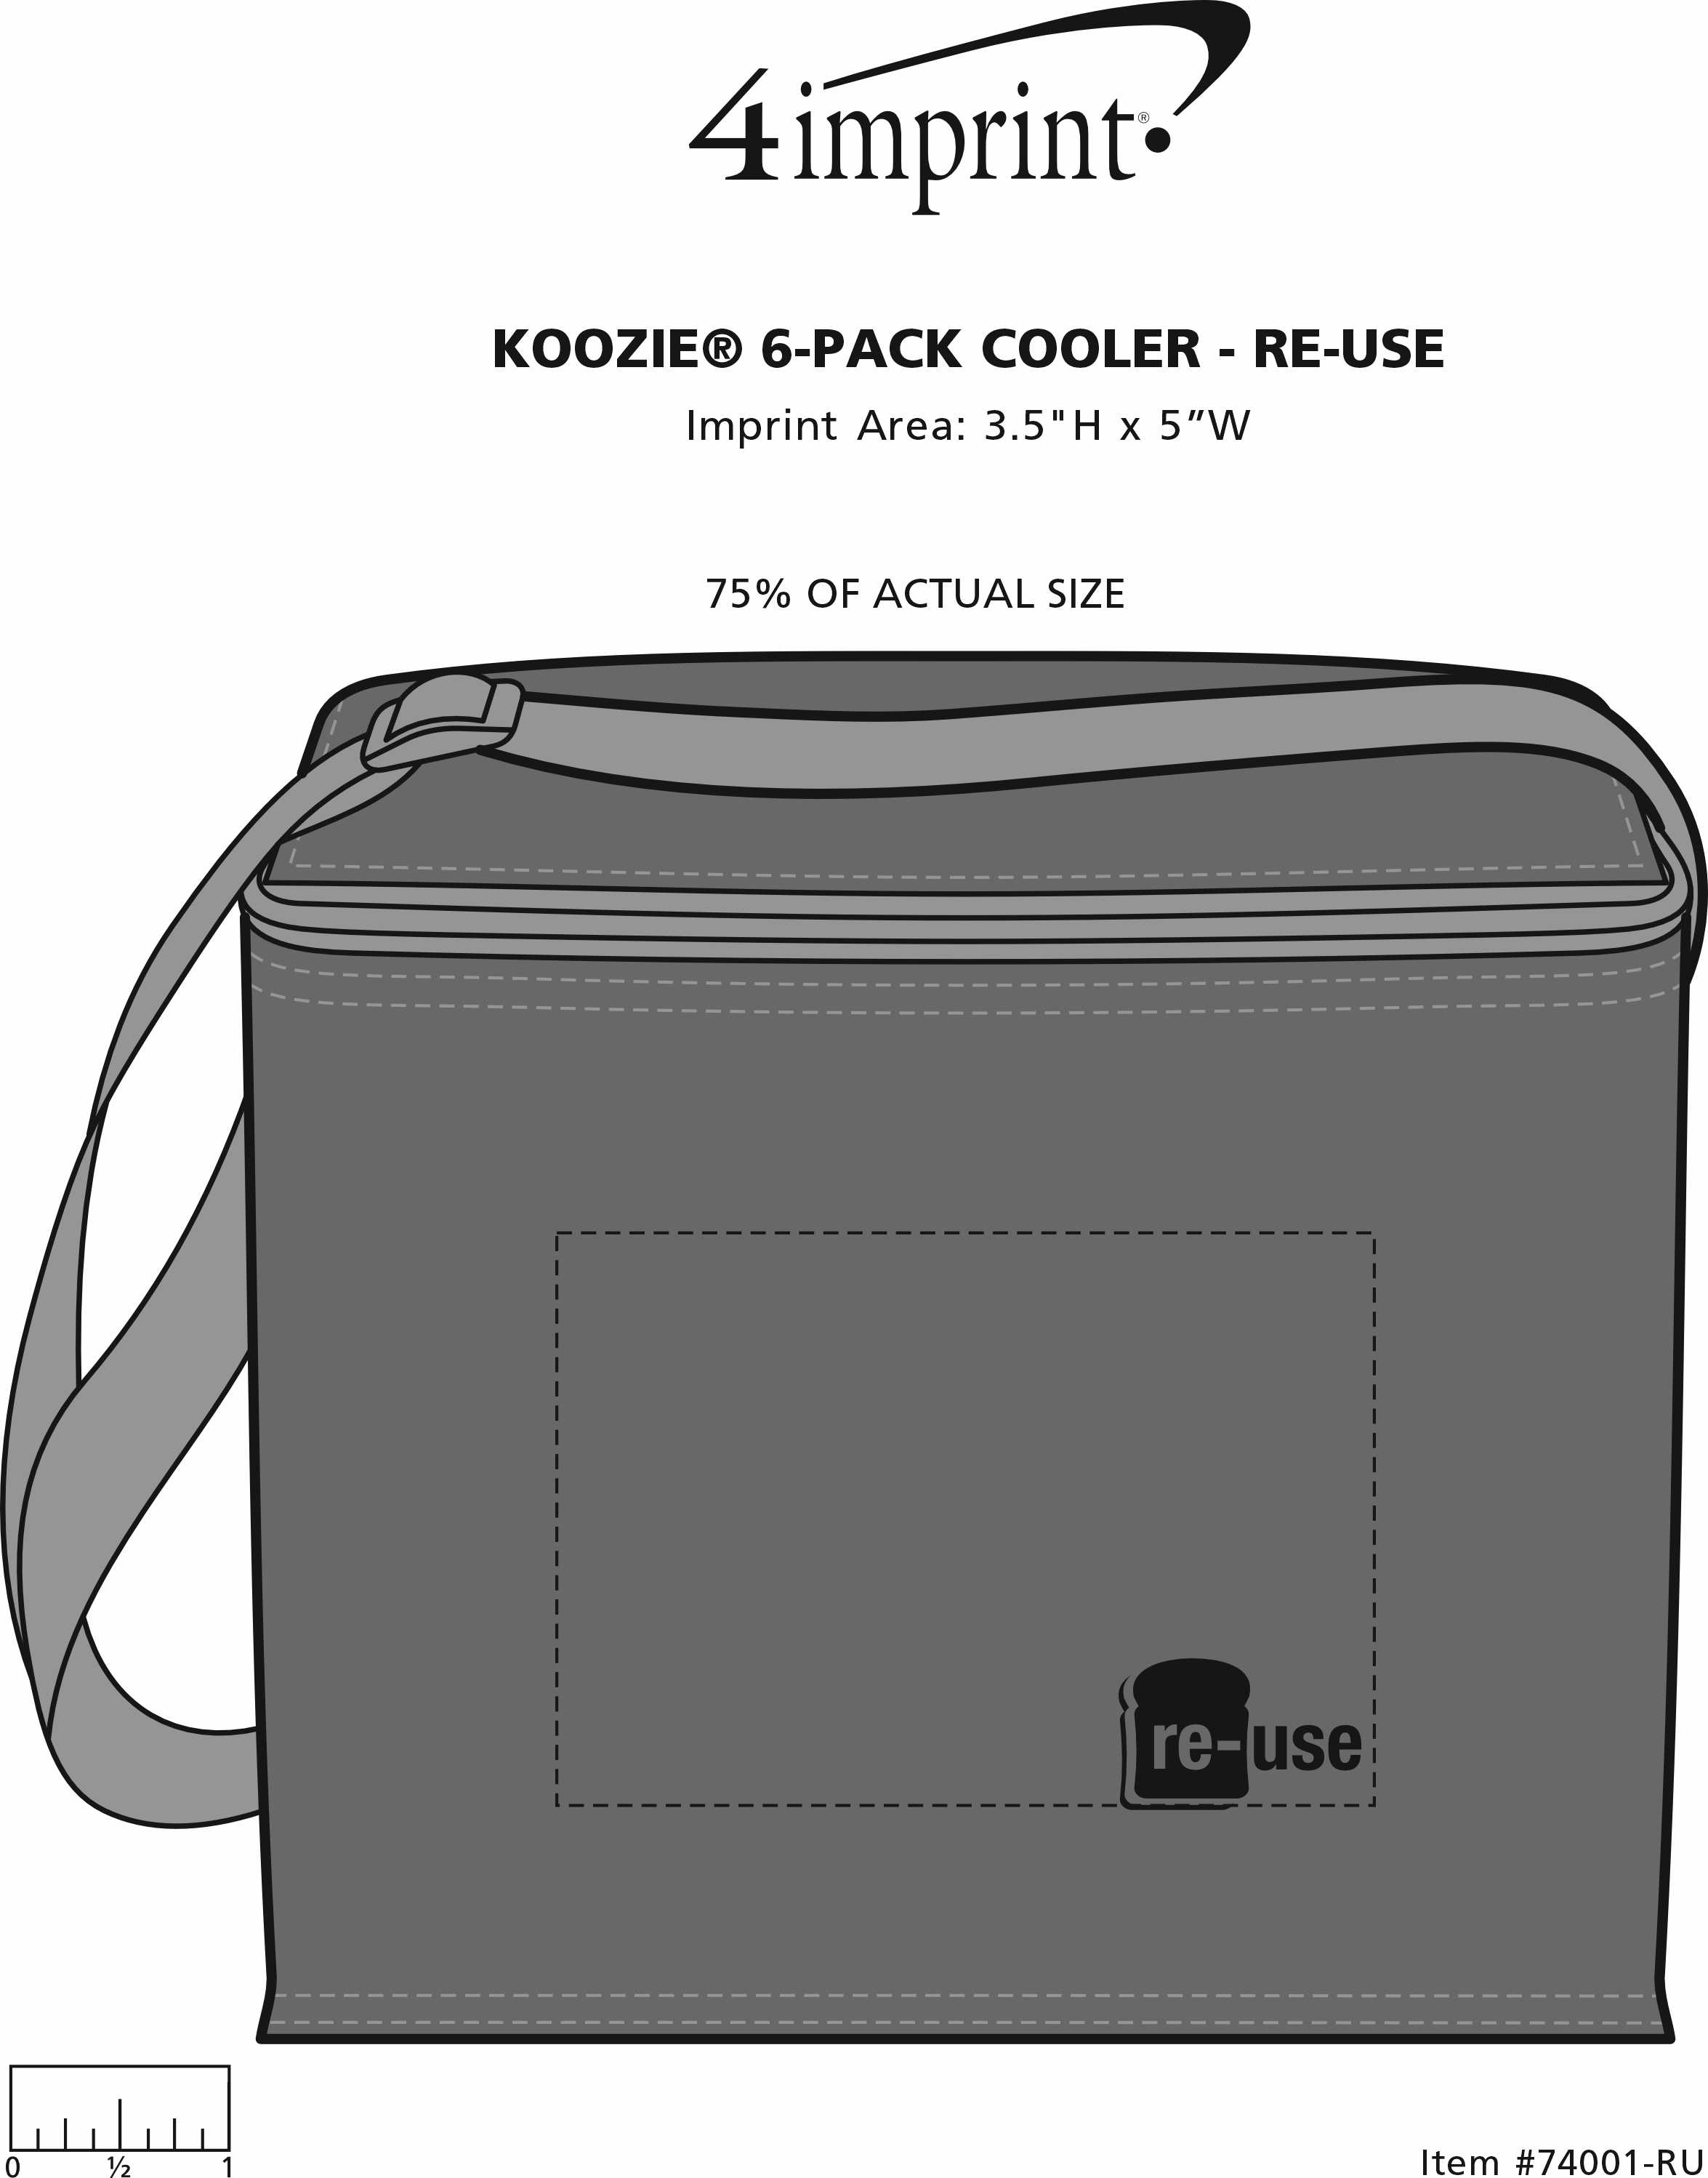 Imprint Area of Koozie® 6-Pack Kooler - Re-Use